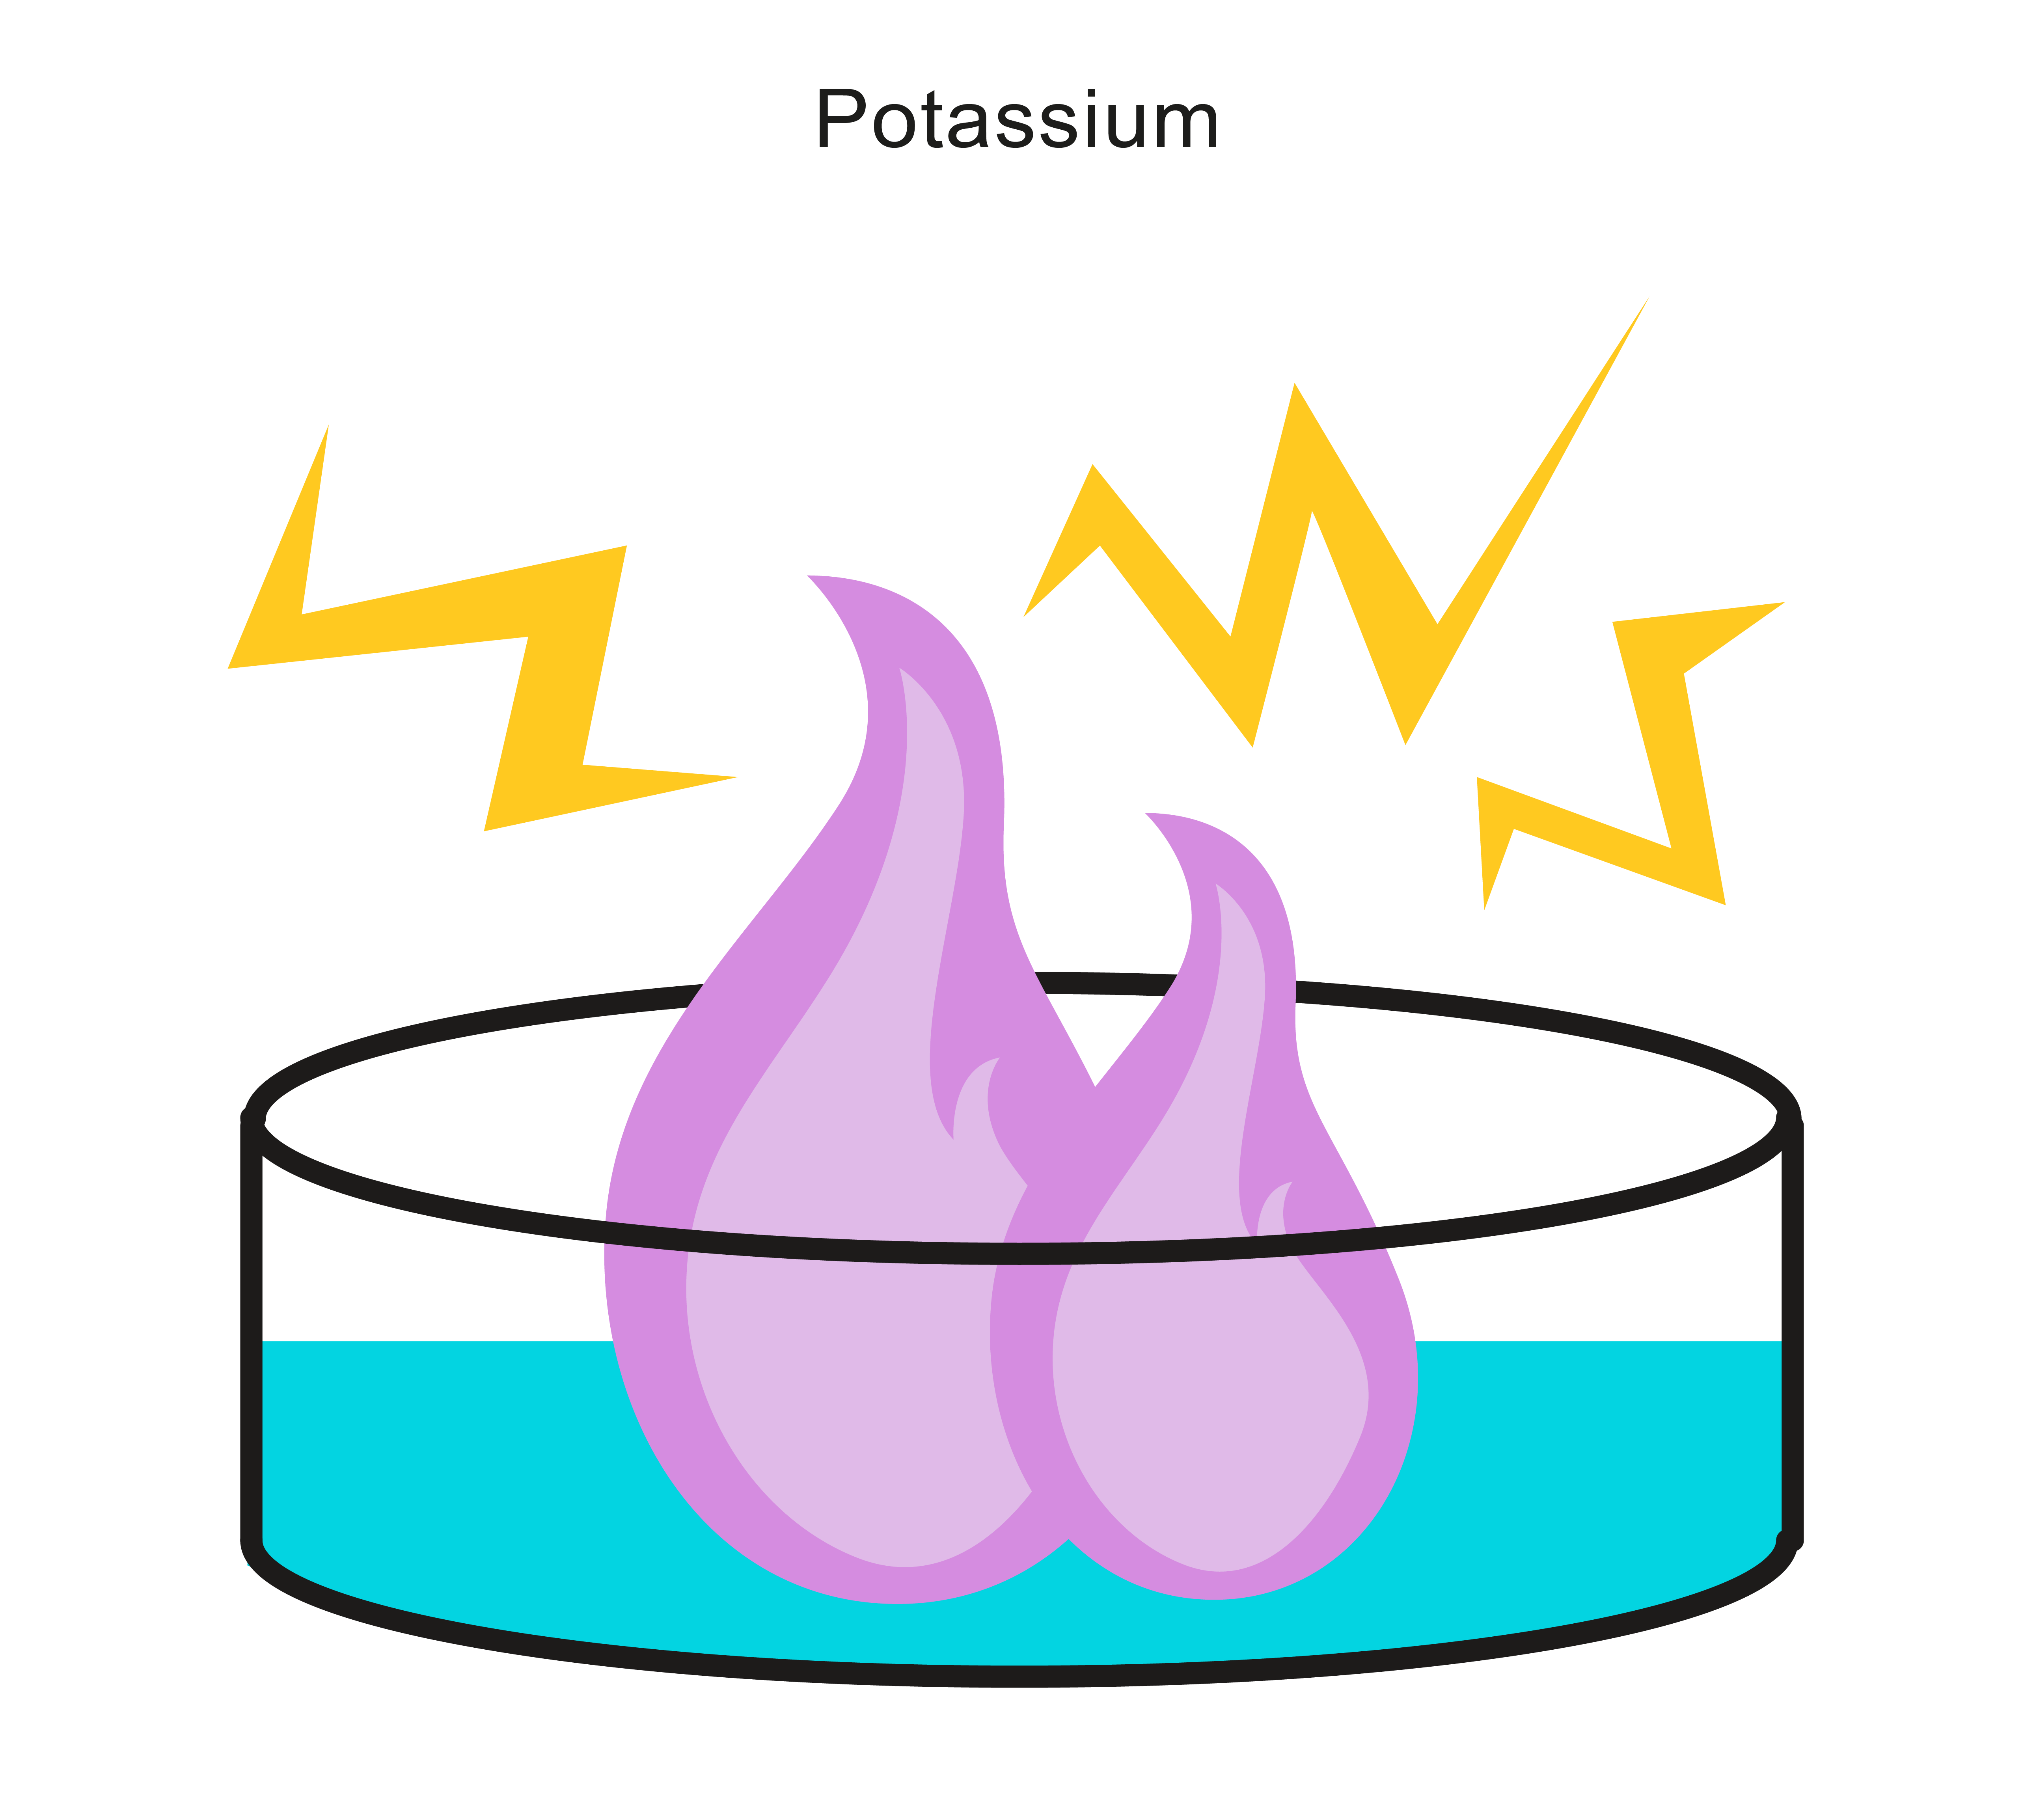 Potassium reacting with water